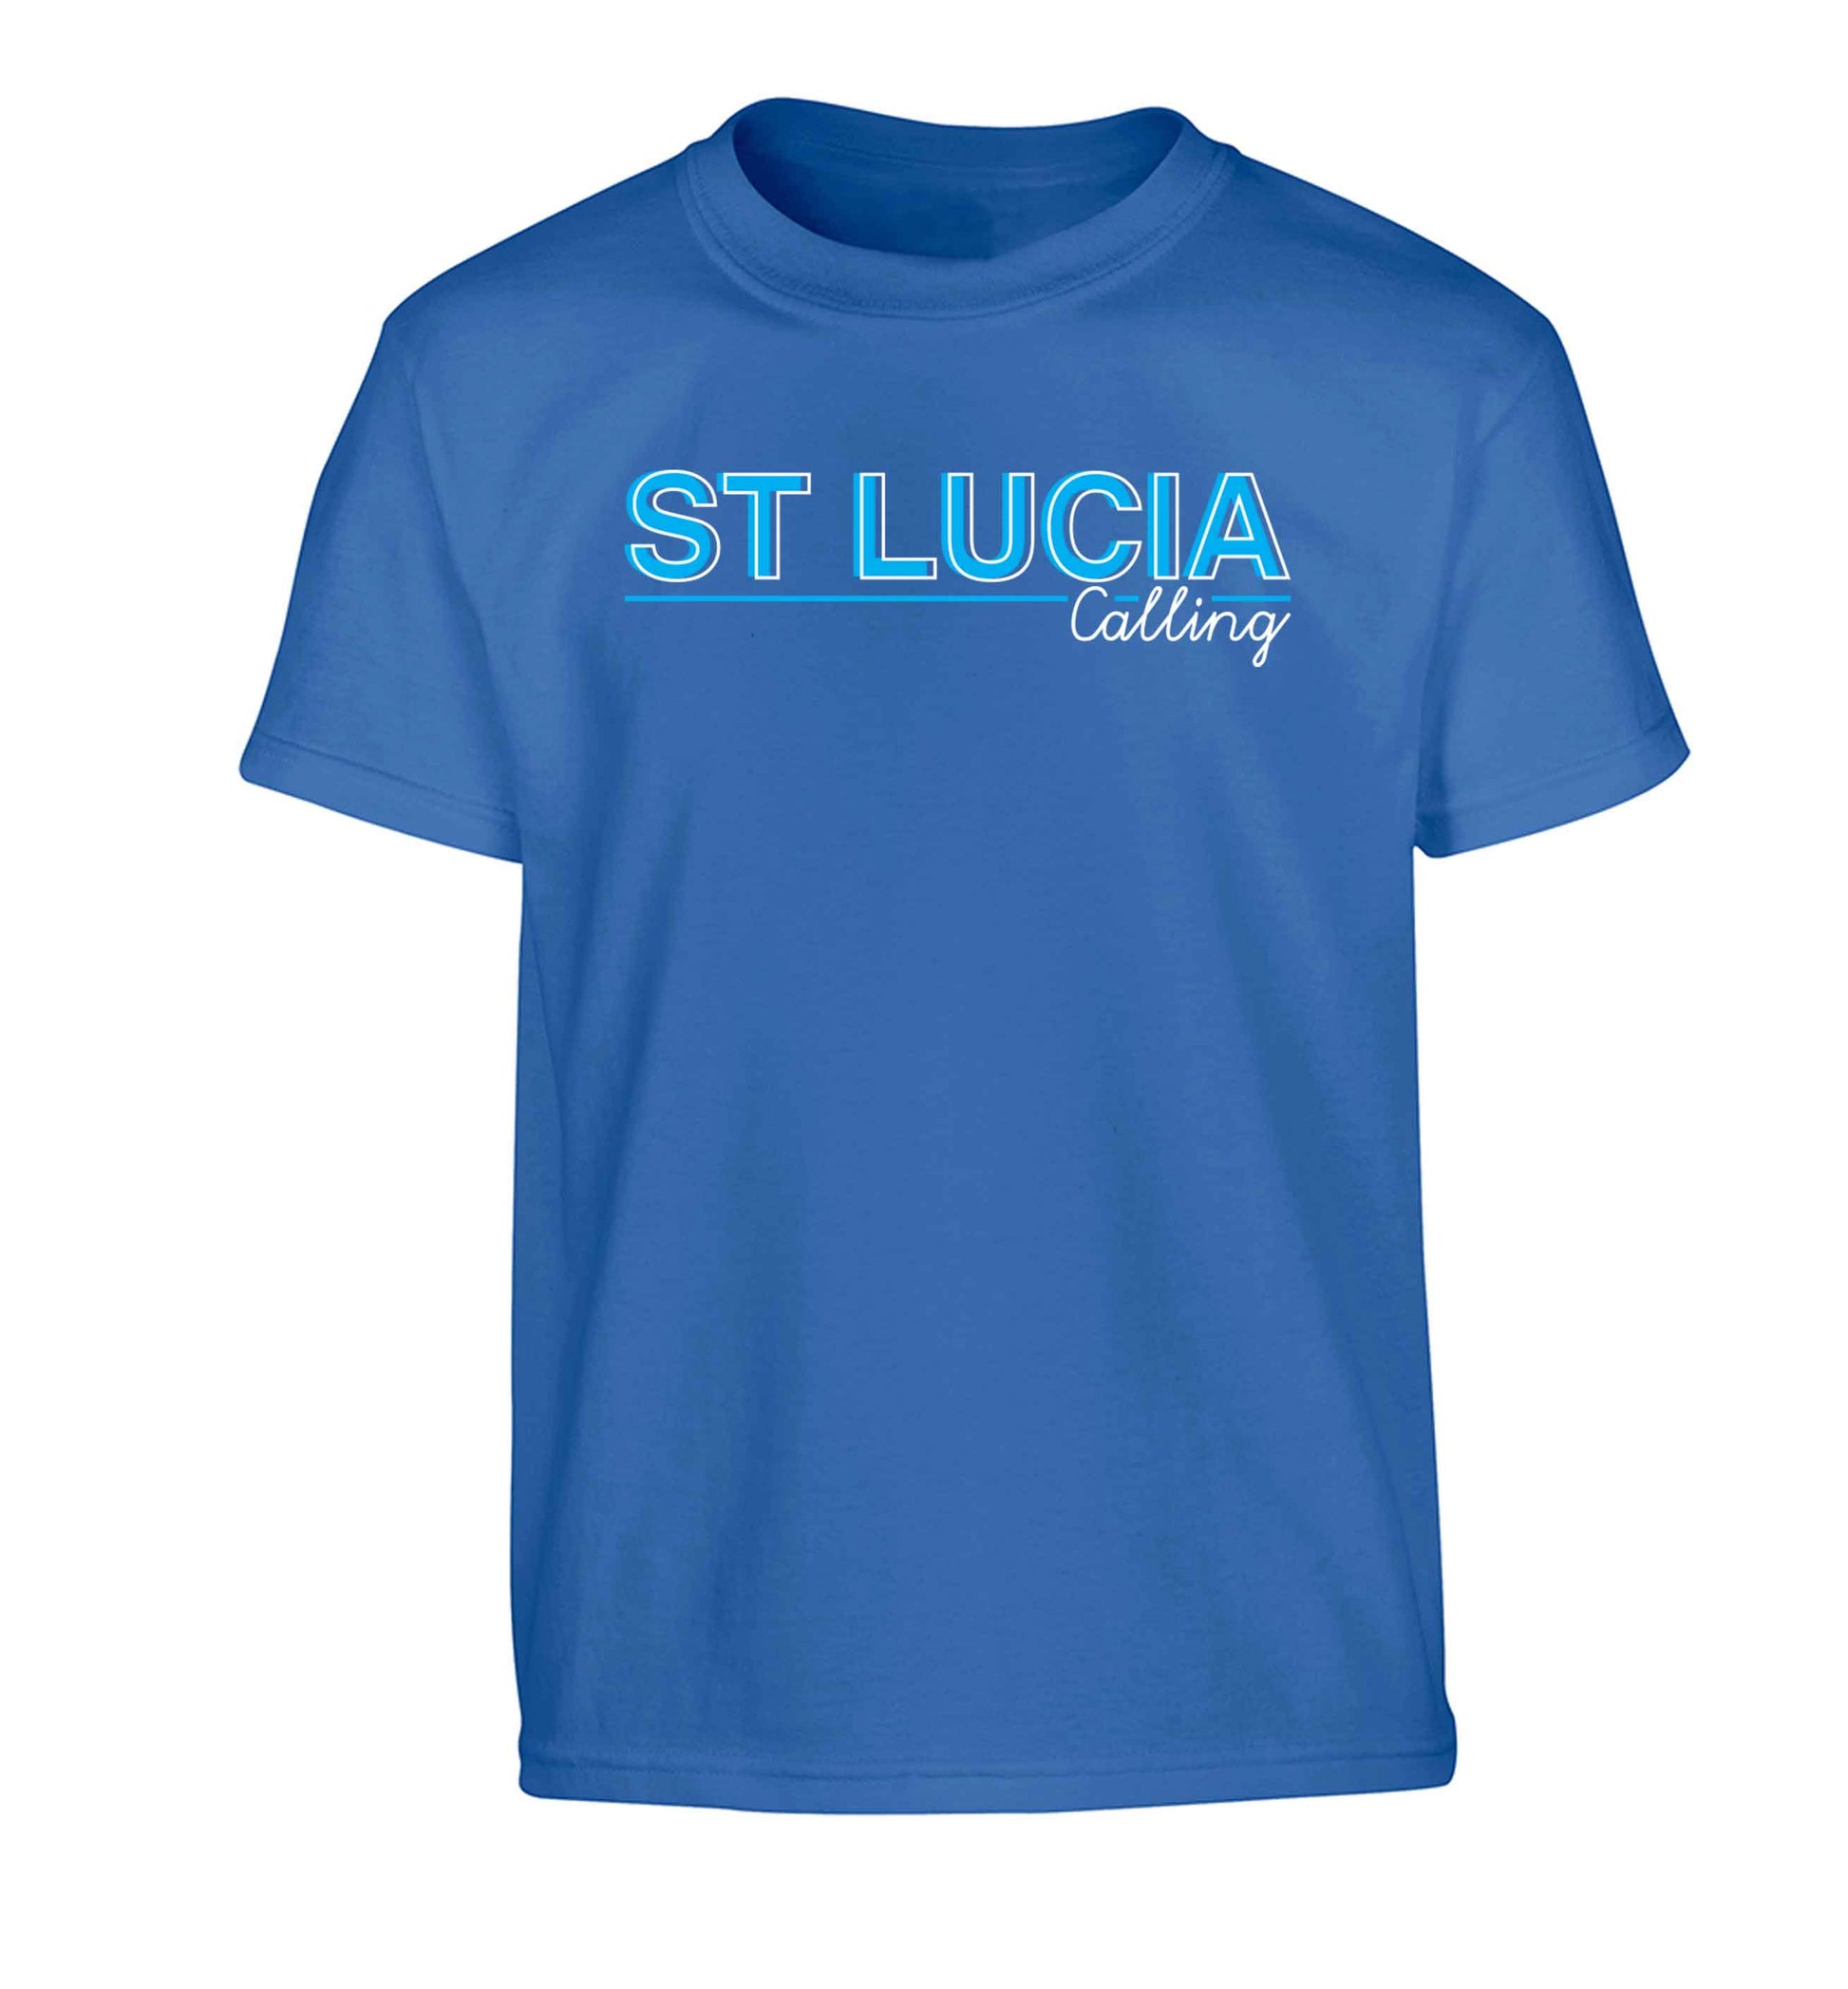 St Lucia calling Children's blue Tshirt 12-13 Years